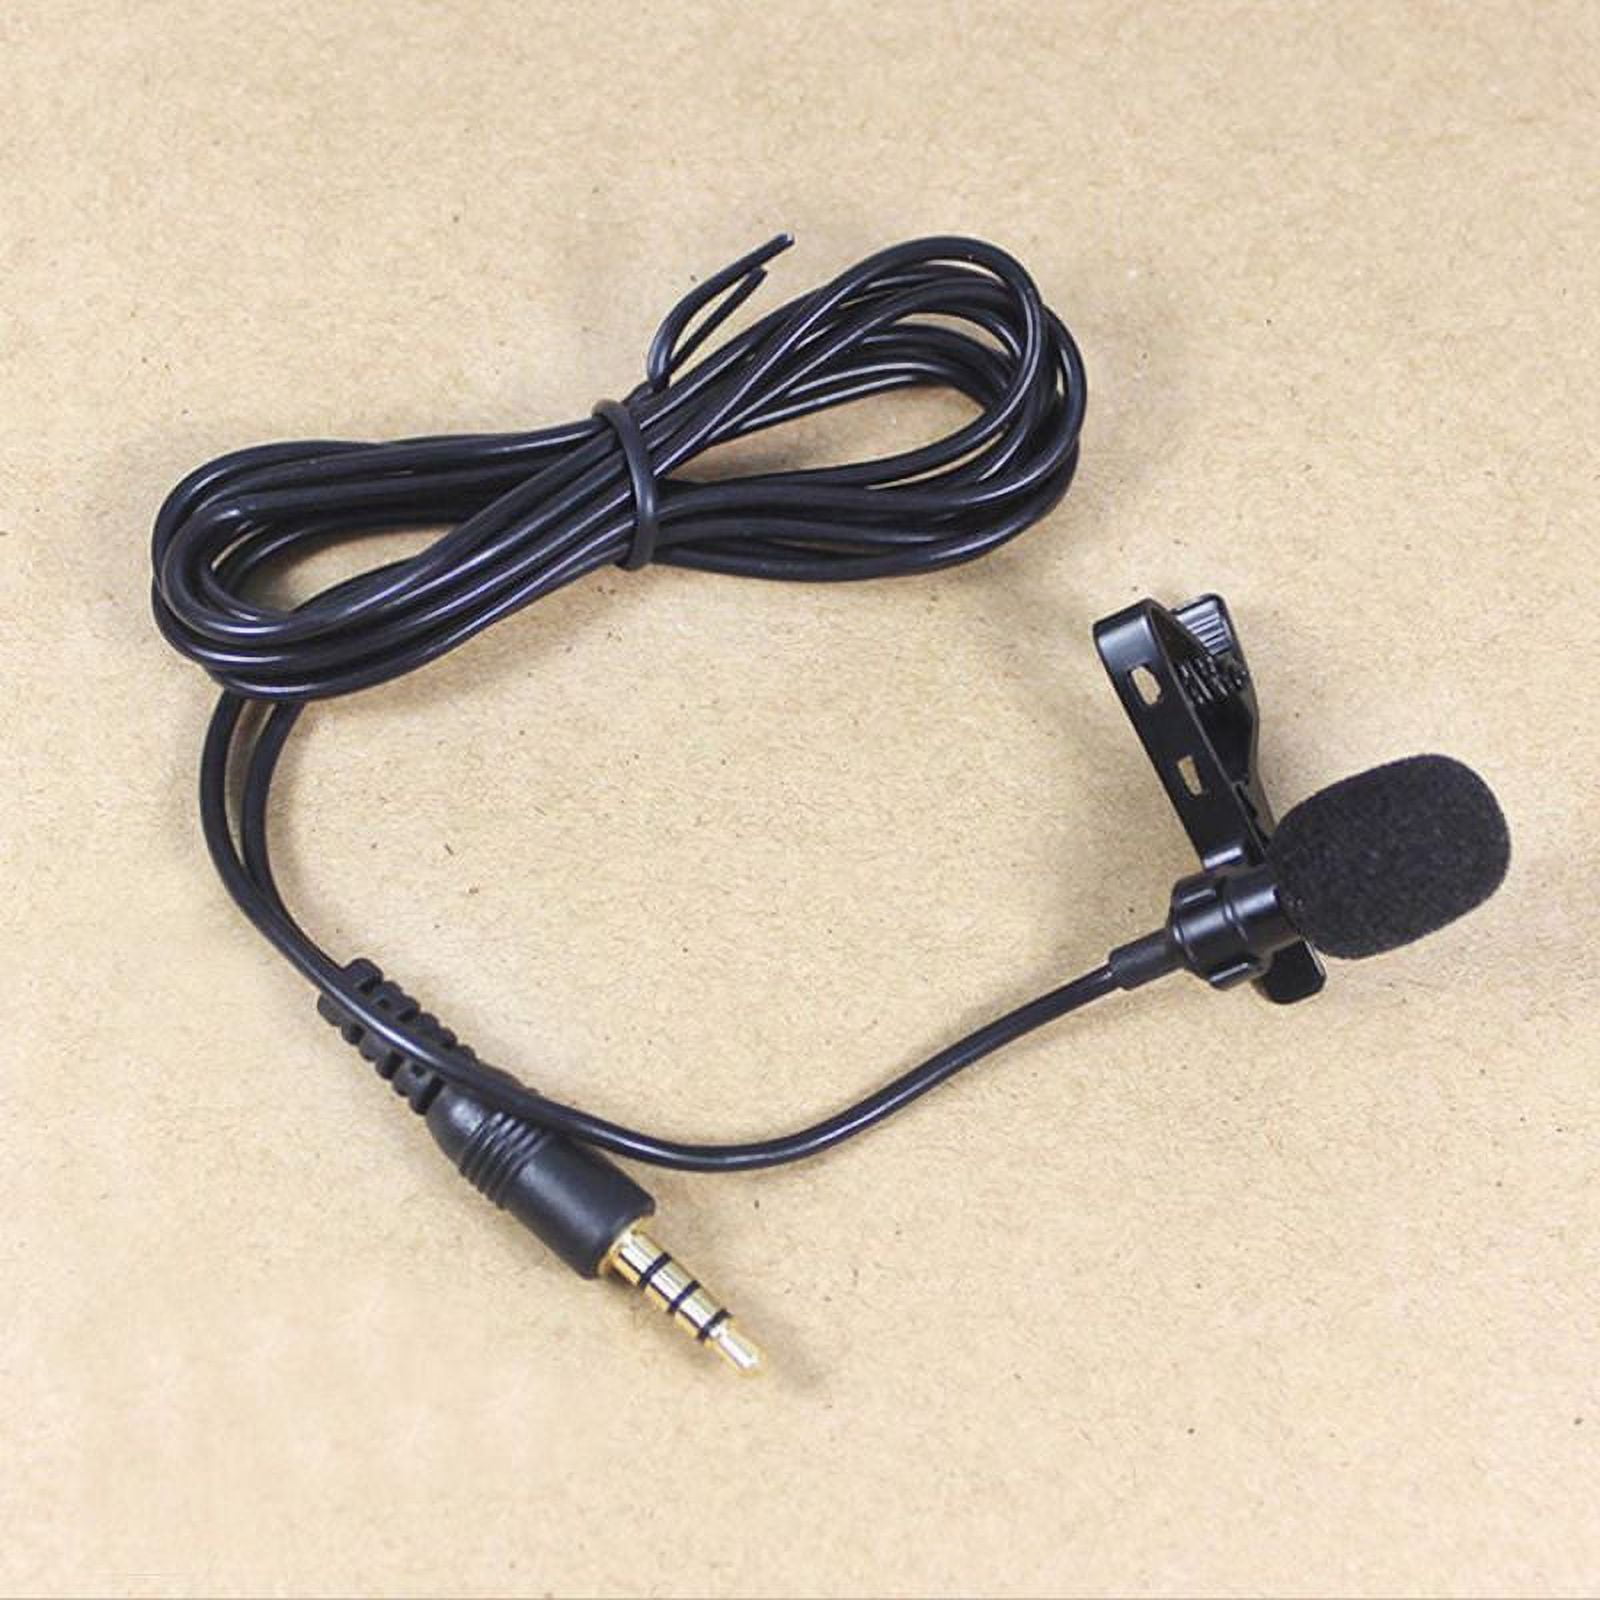 Micrófono solapa conector 3,5 mm, Sanda, Correos Market